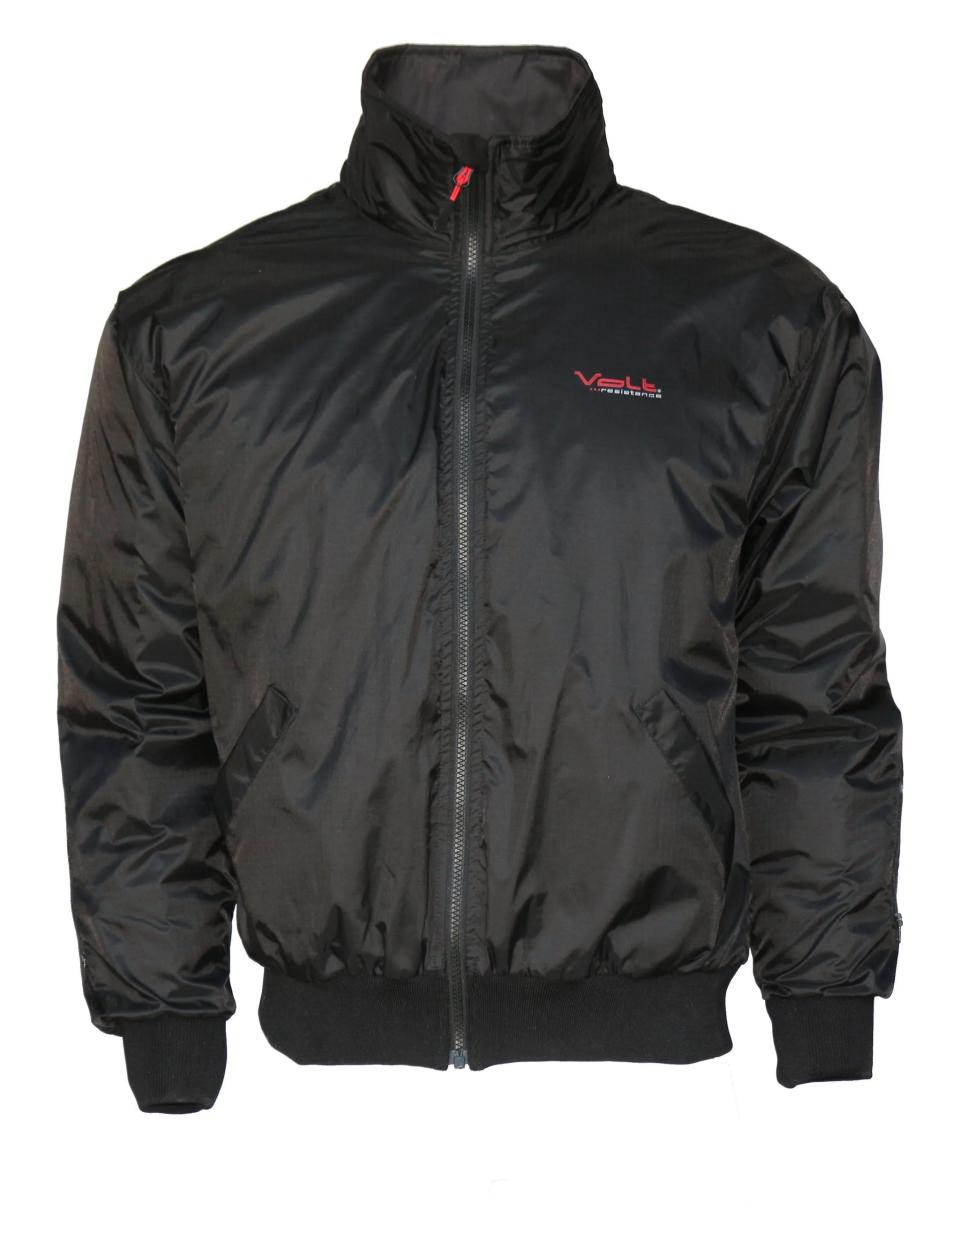 Volt Moto Heated Jacket Liner; best heated jacket, heated jackets